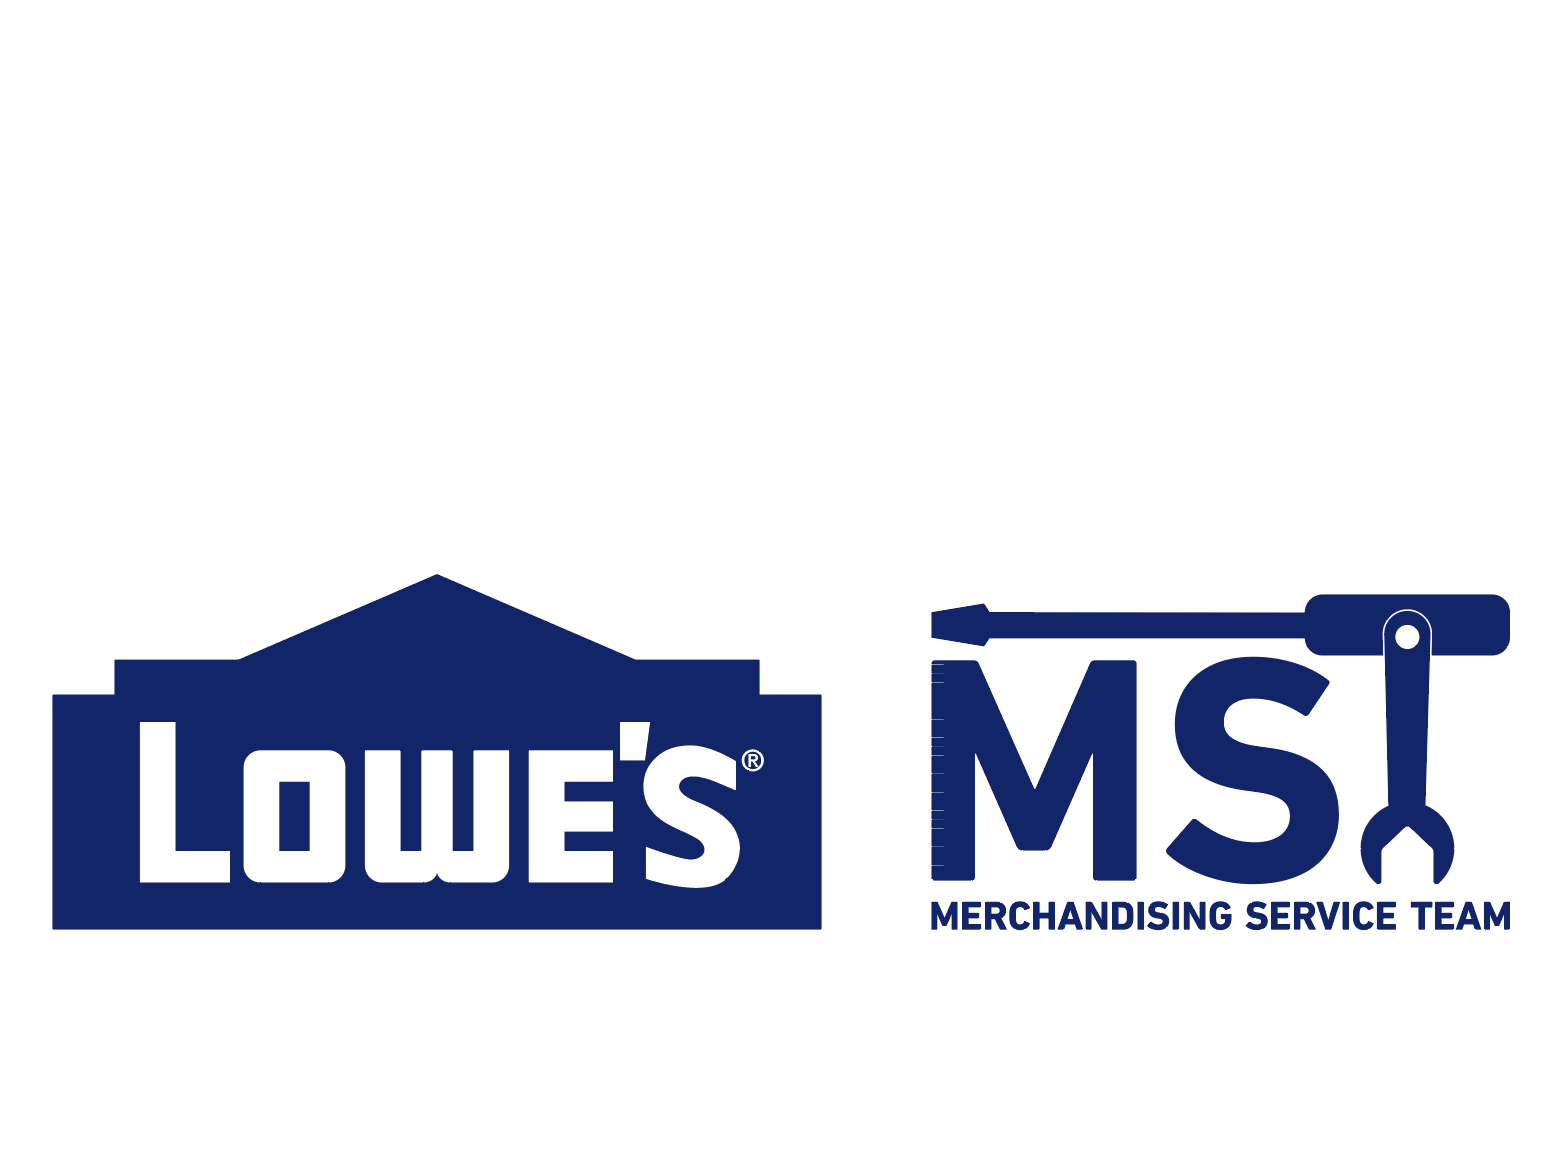 Lowe's MST logo by Michael Griffin on Dribbble